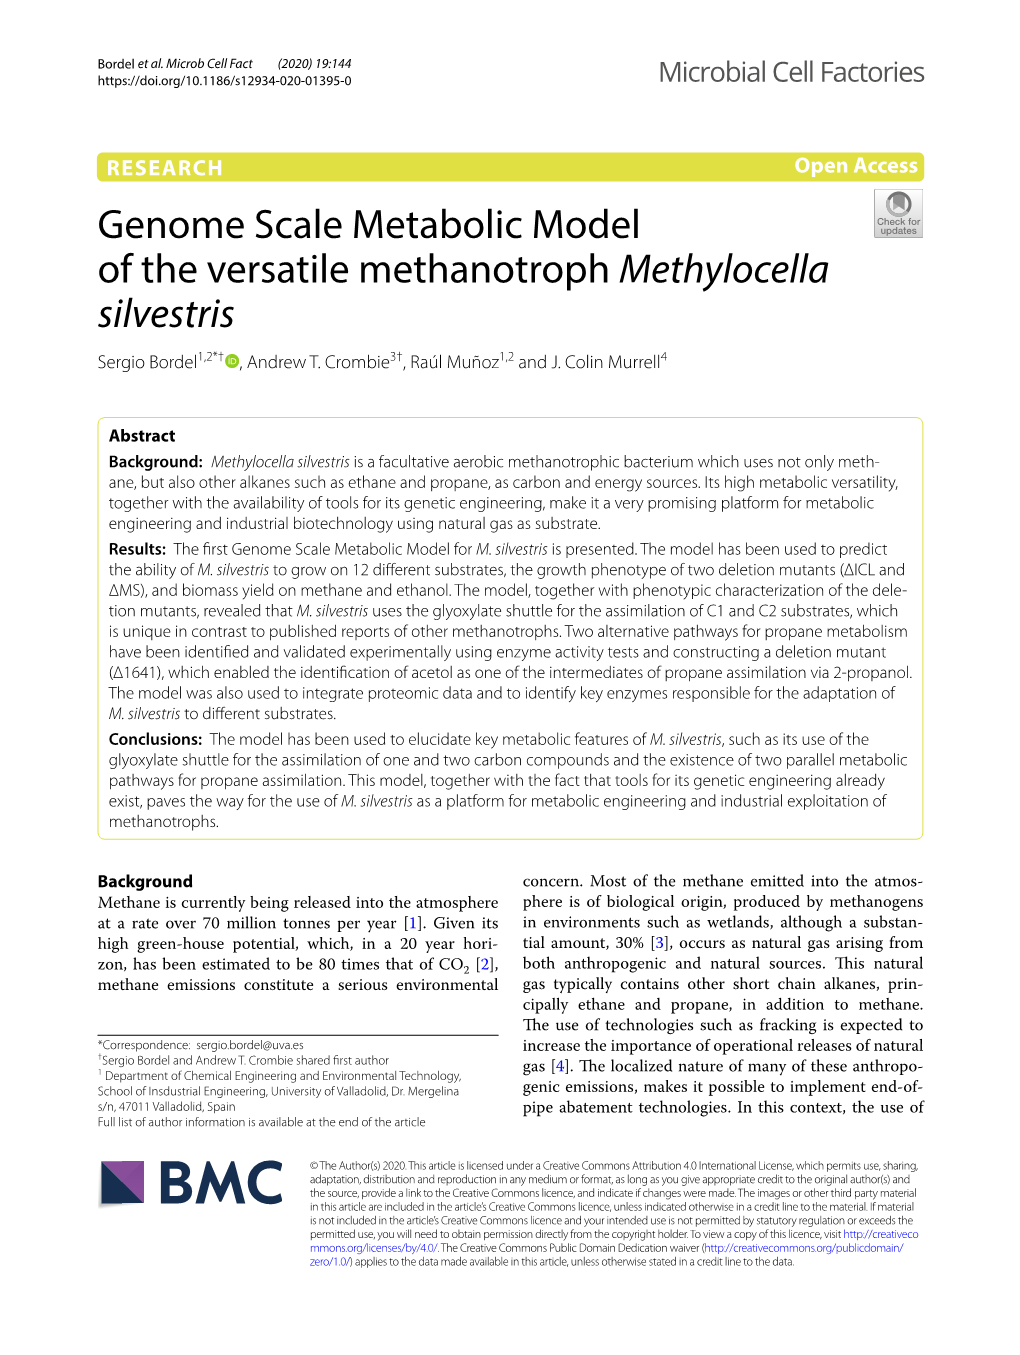 Genome Scale Metabolic Model of the Versatile Methanotroph Methylocella Silvestris Sergio Bordel1,2*† , Andrew T